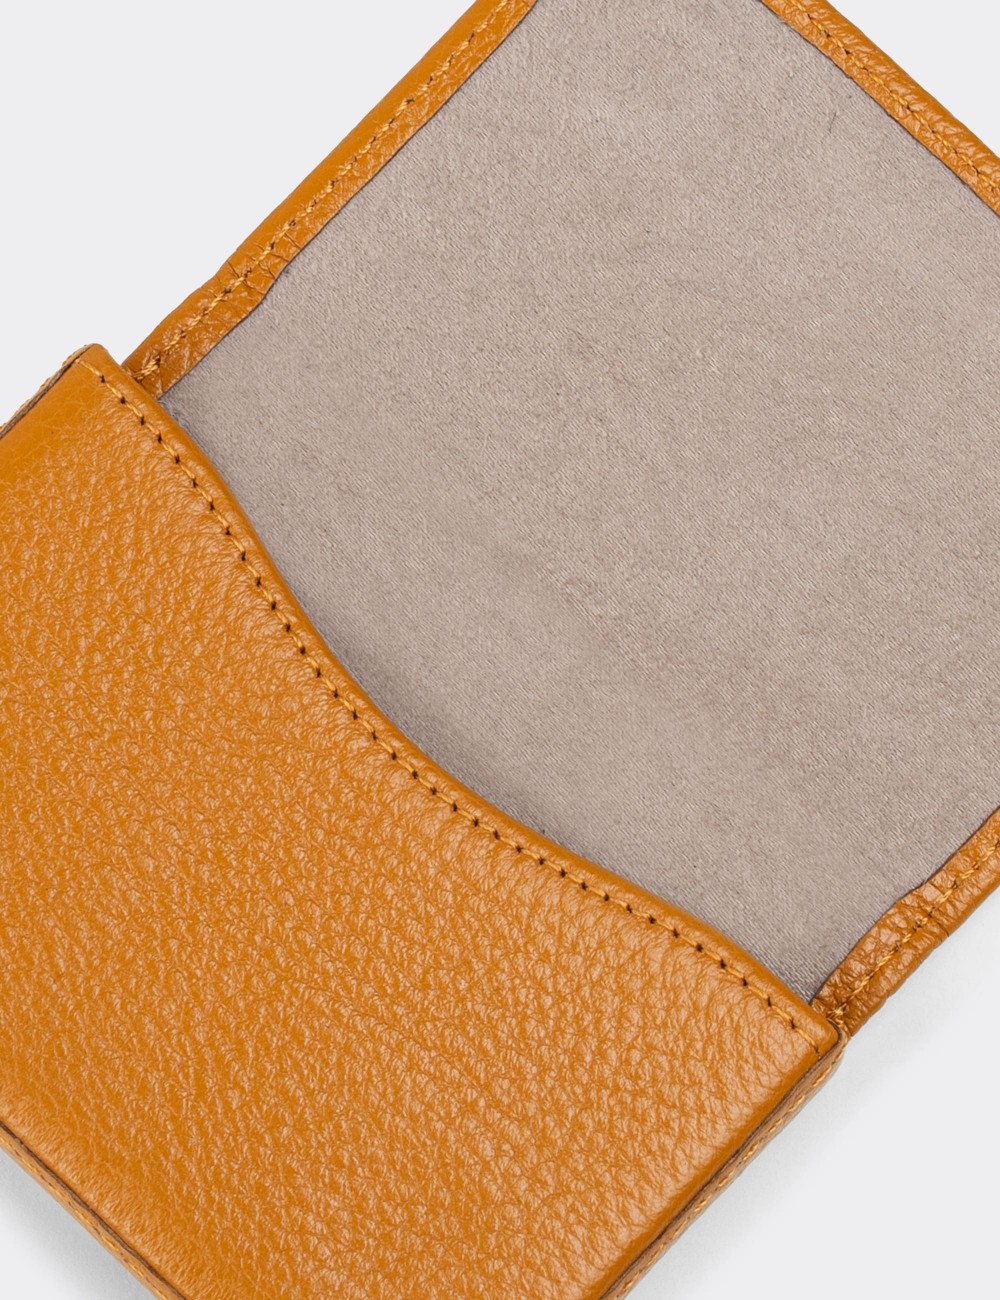  Leather Yellow Men's Wallet - 00522MHRDZ01